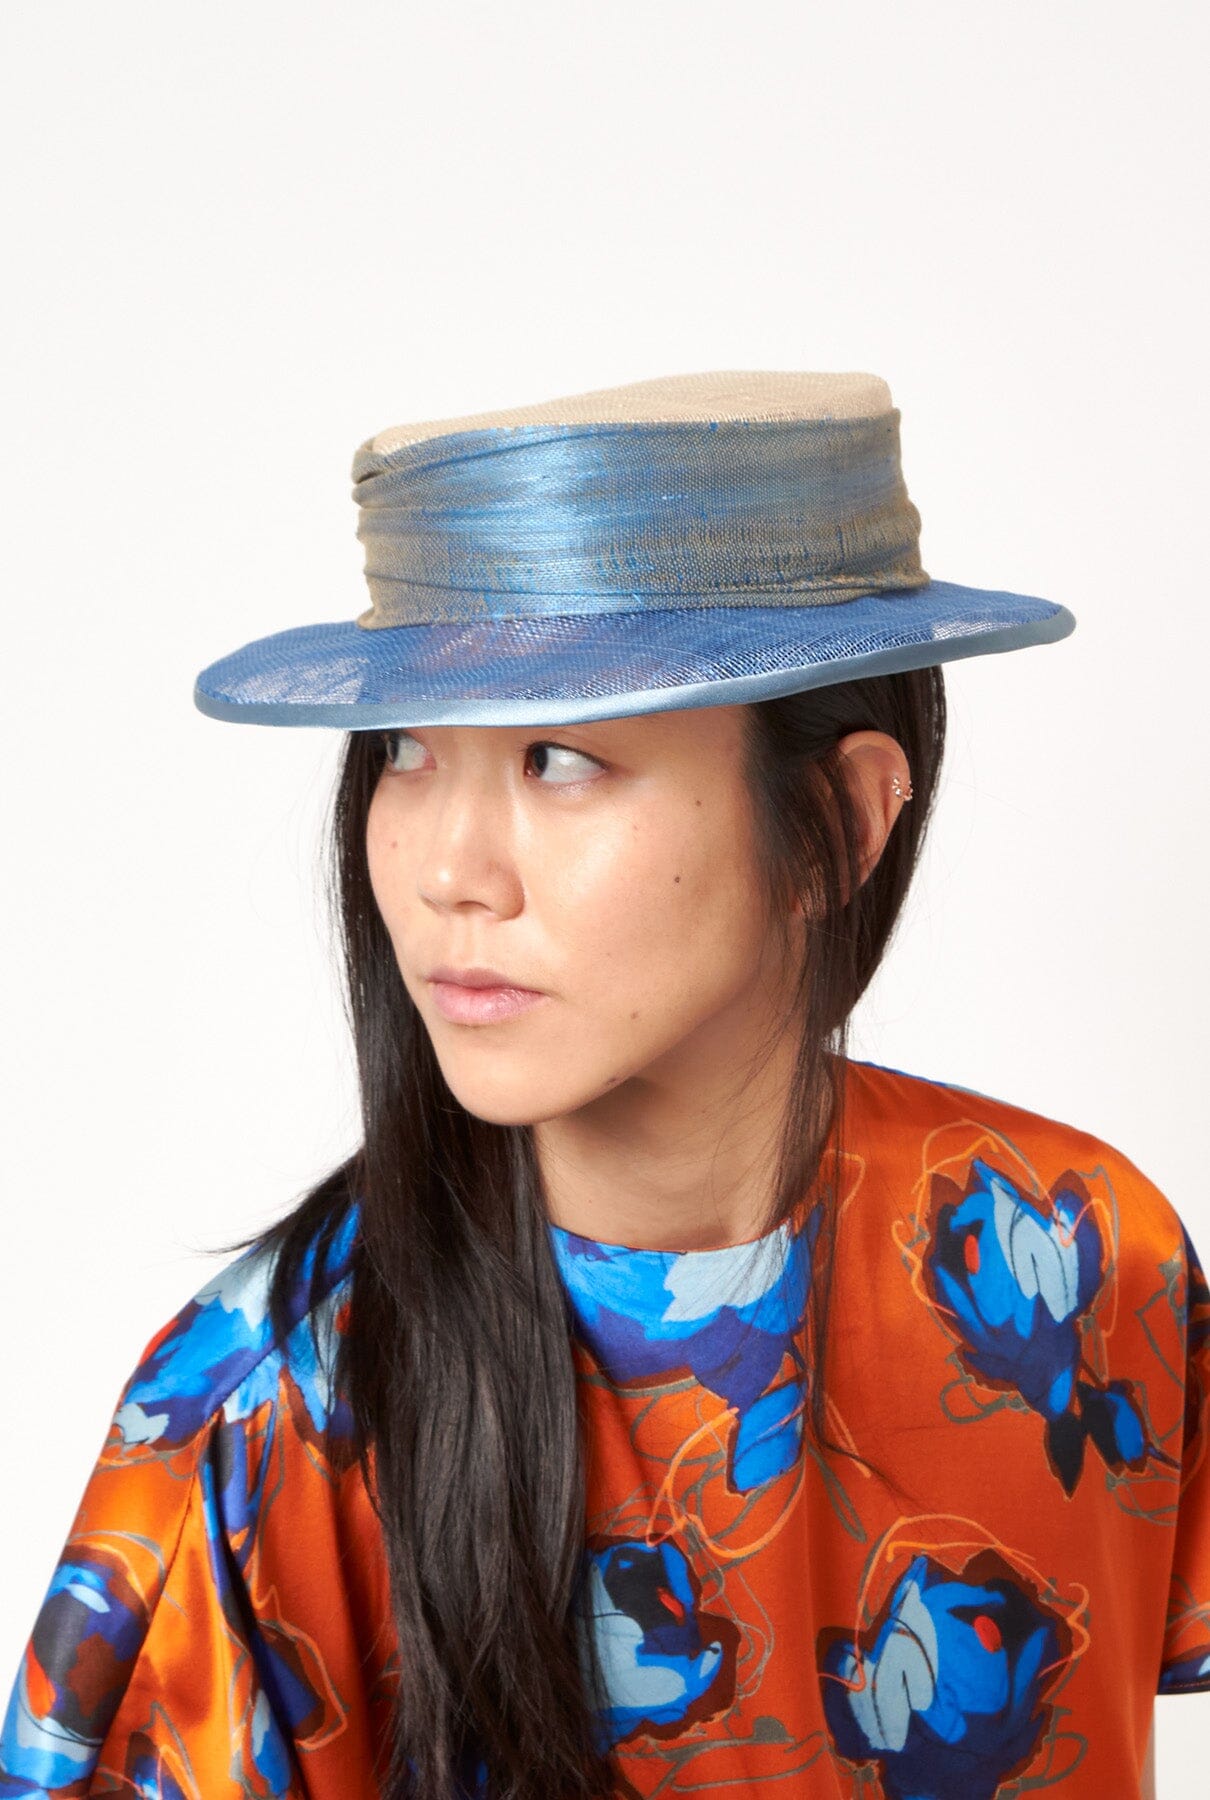 Canotier azul de sinamay Hats Coterelle 